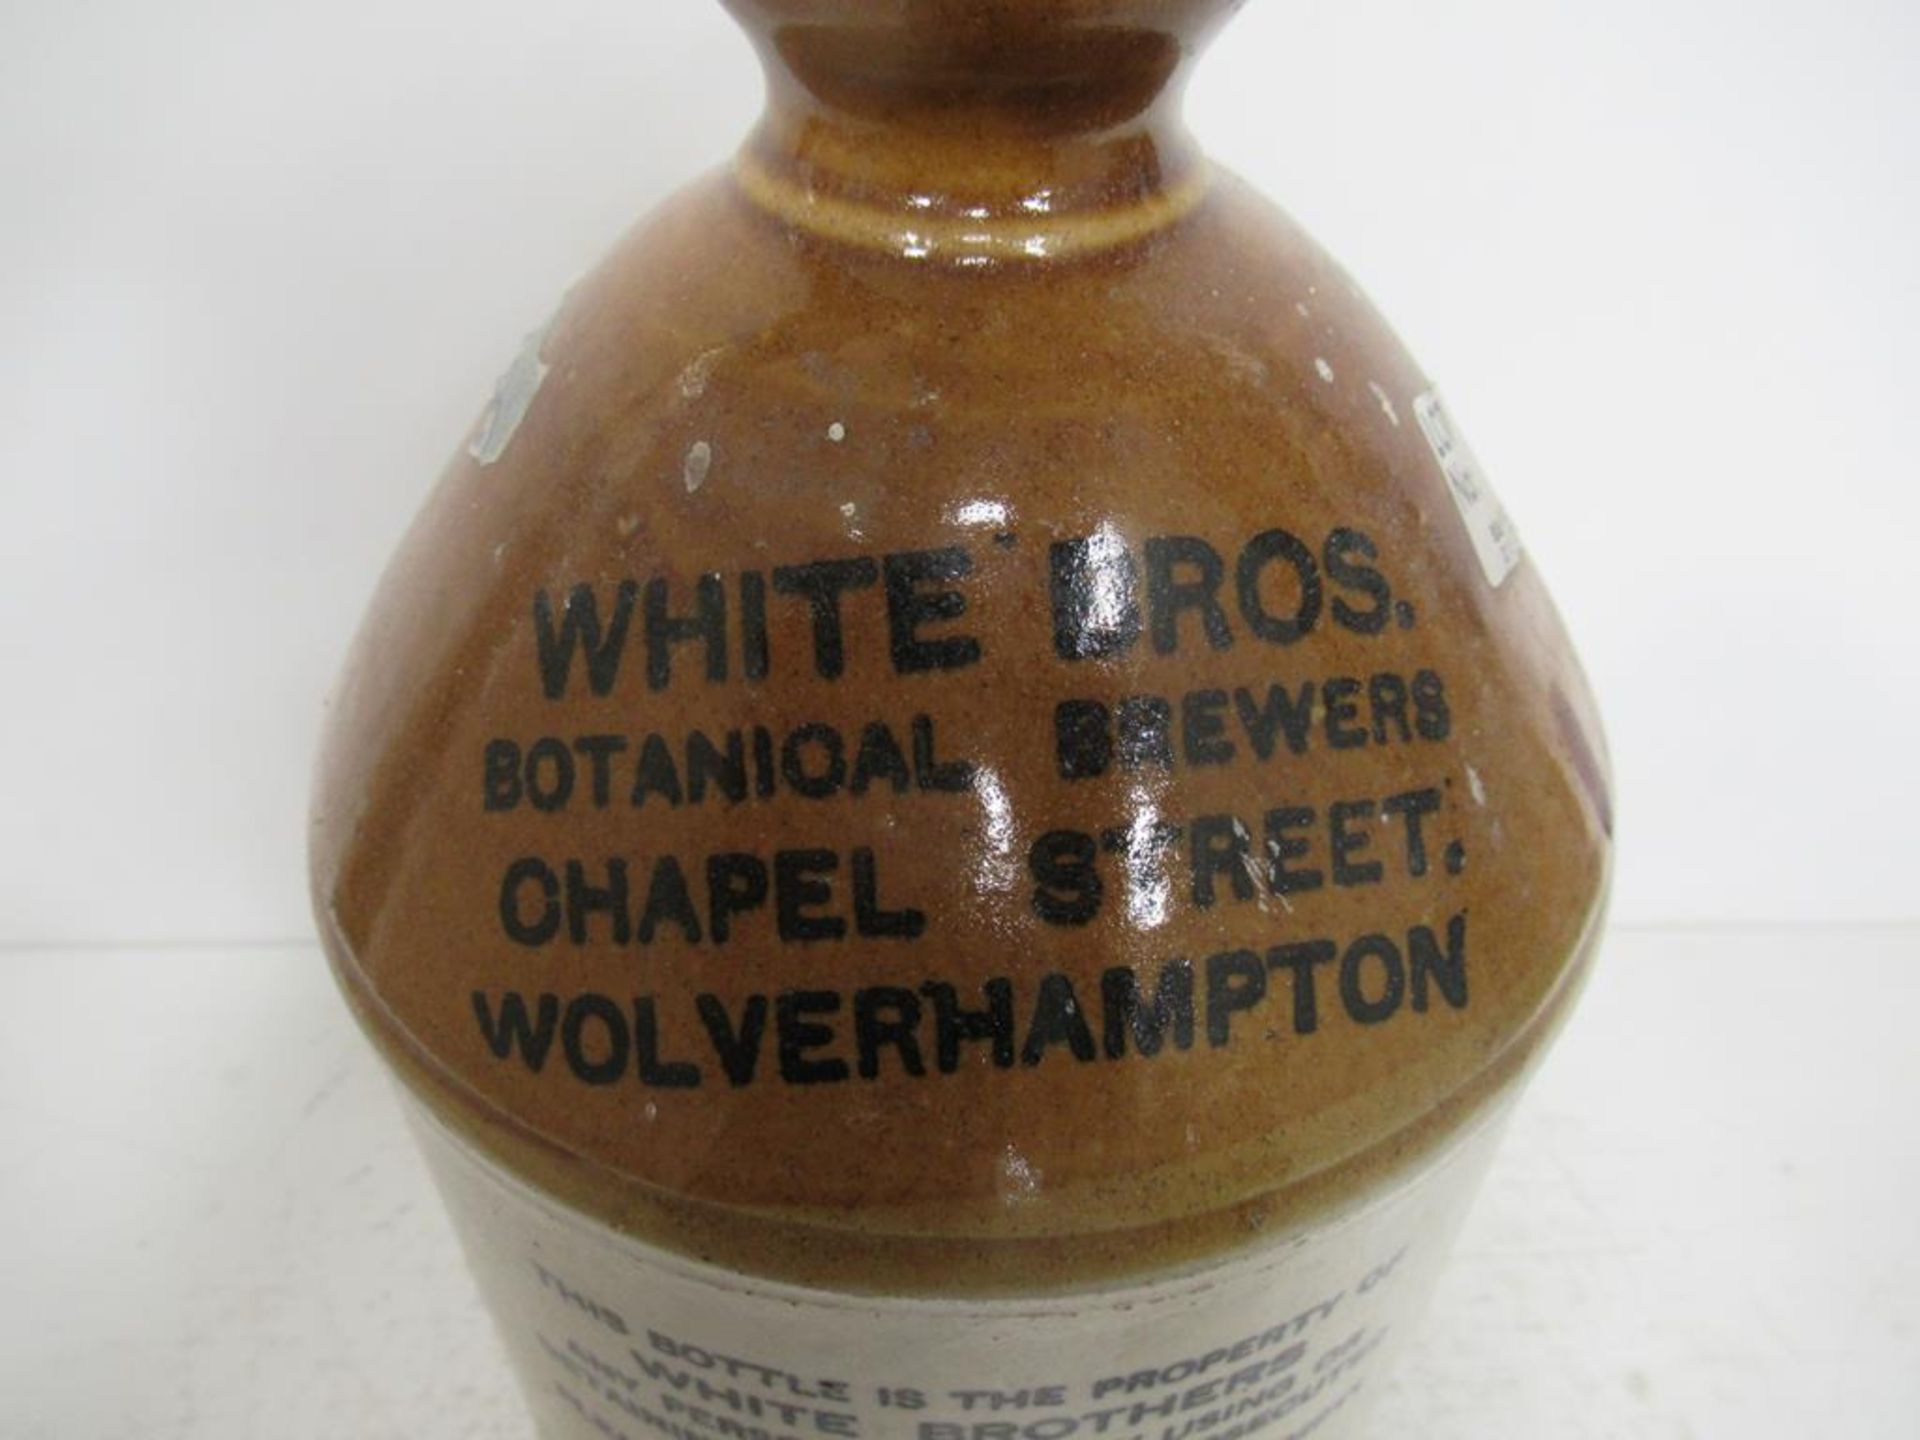 White Bros. Botanical Brewers Chapel Street Wolverhampton 1964 Flagon